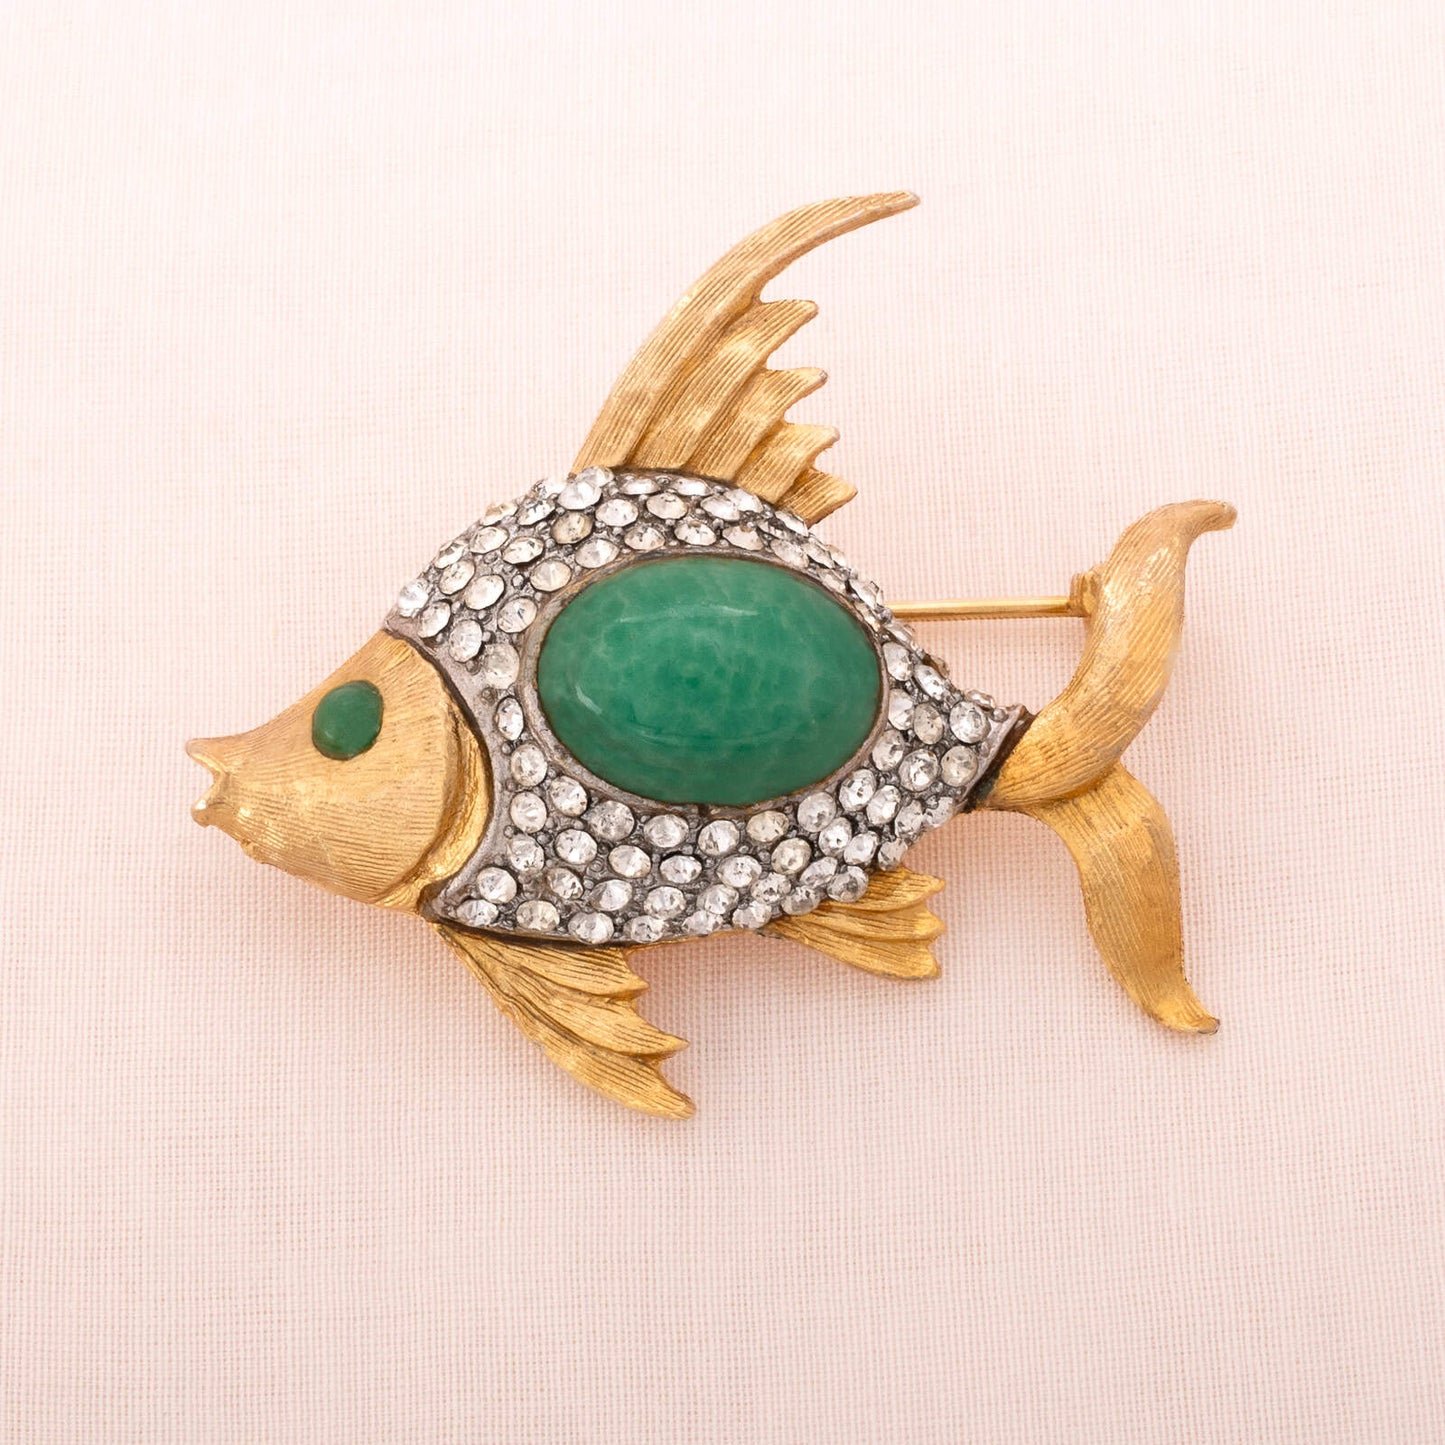 Vintage designer fish brooch with green cabochons